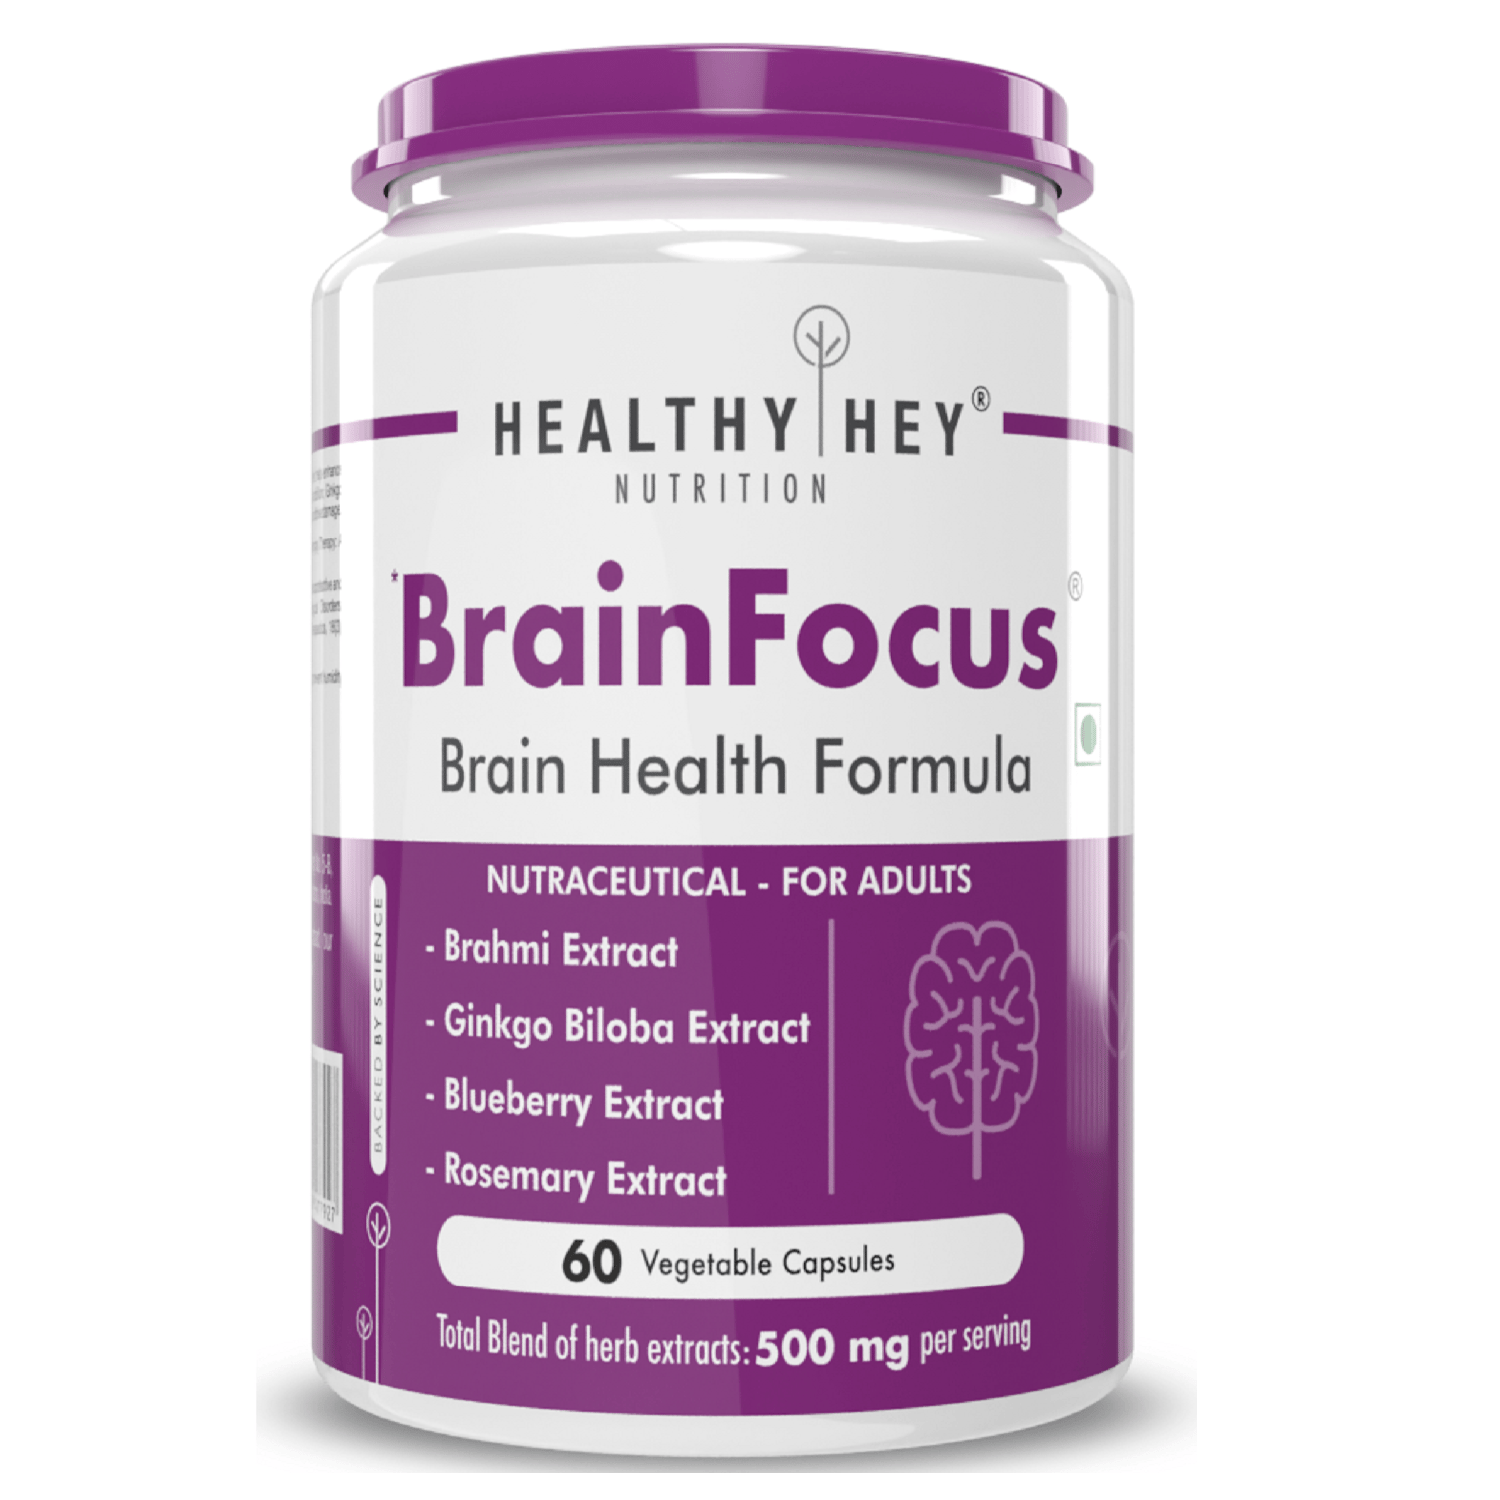 HealthyHey Nutrition BrainFocus - Natural Brain Health Formula (60 Veg Capsules)